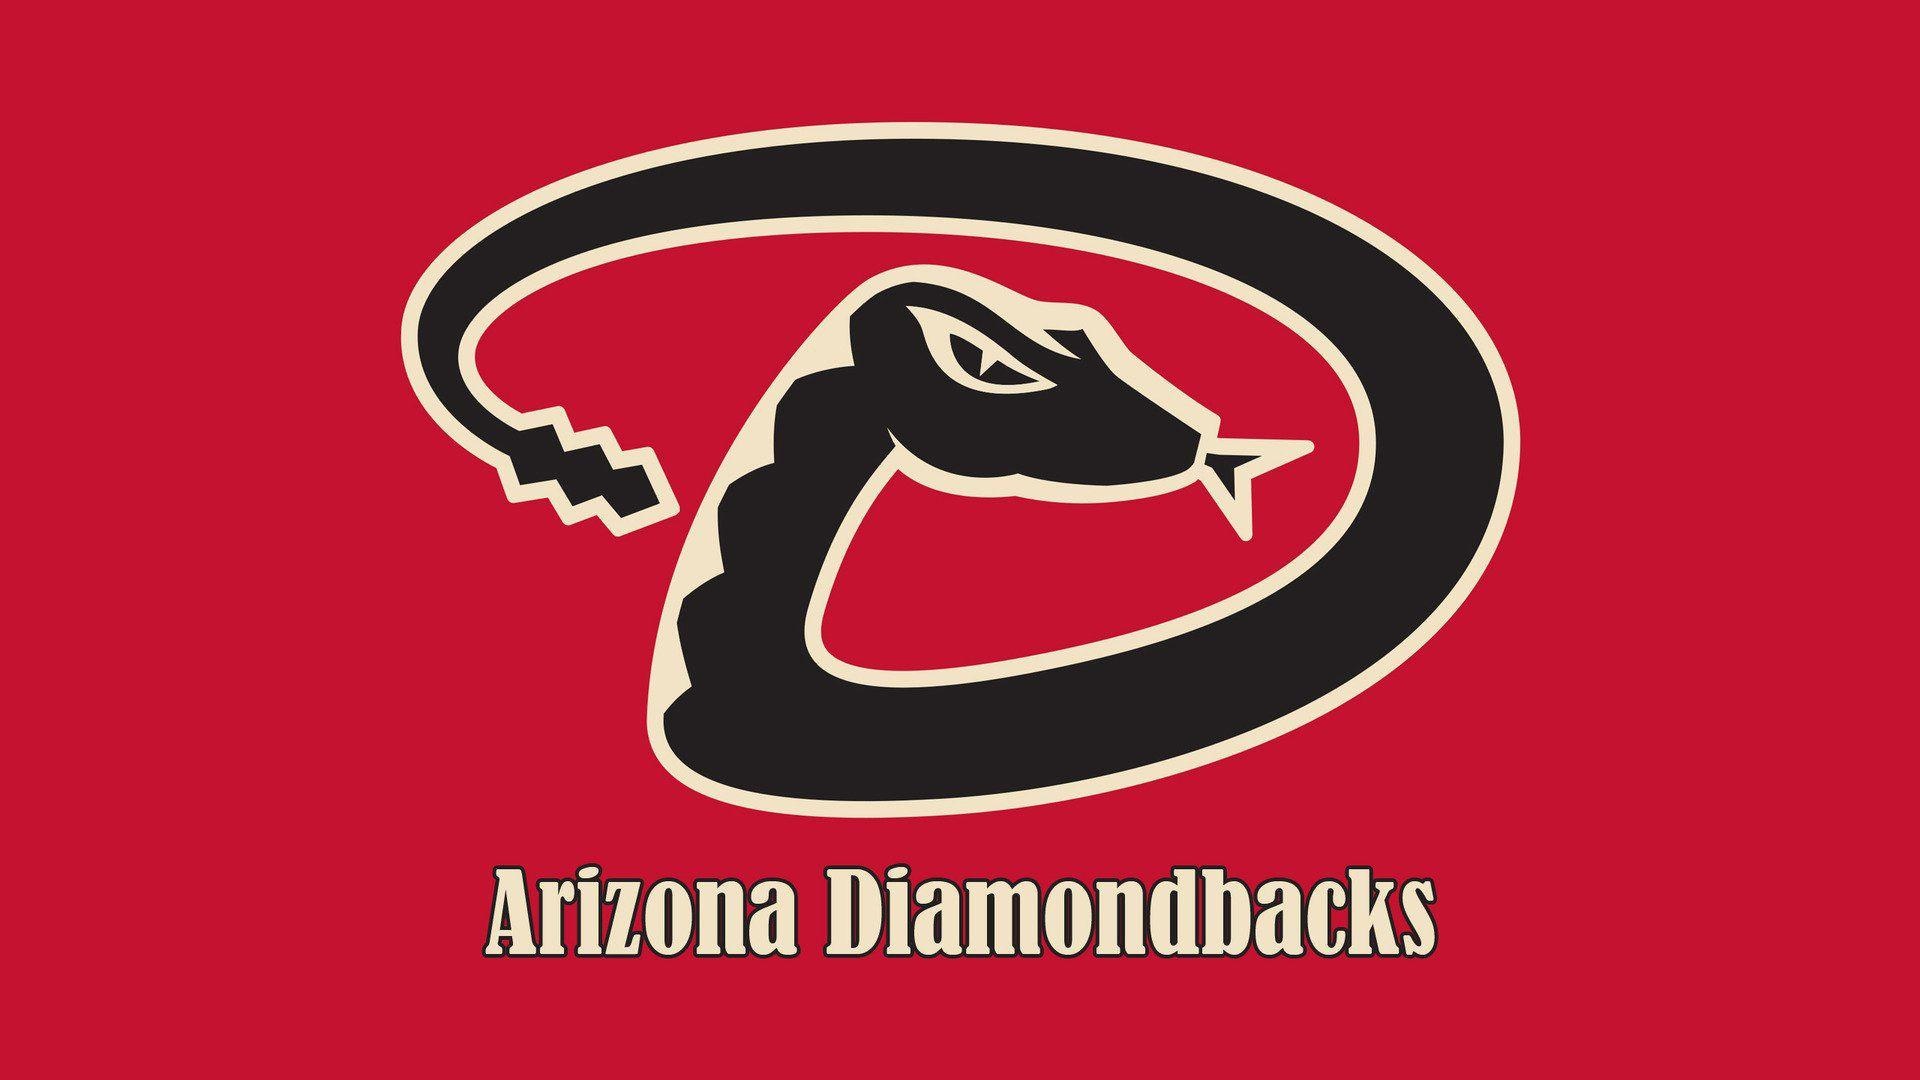 Arizona Diamondbacks, 2018 season, Team wallpapers, Baseball pride, 1920x1080 Full HD Desktop